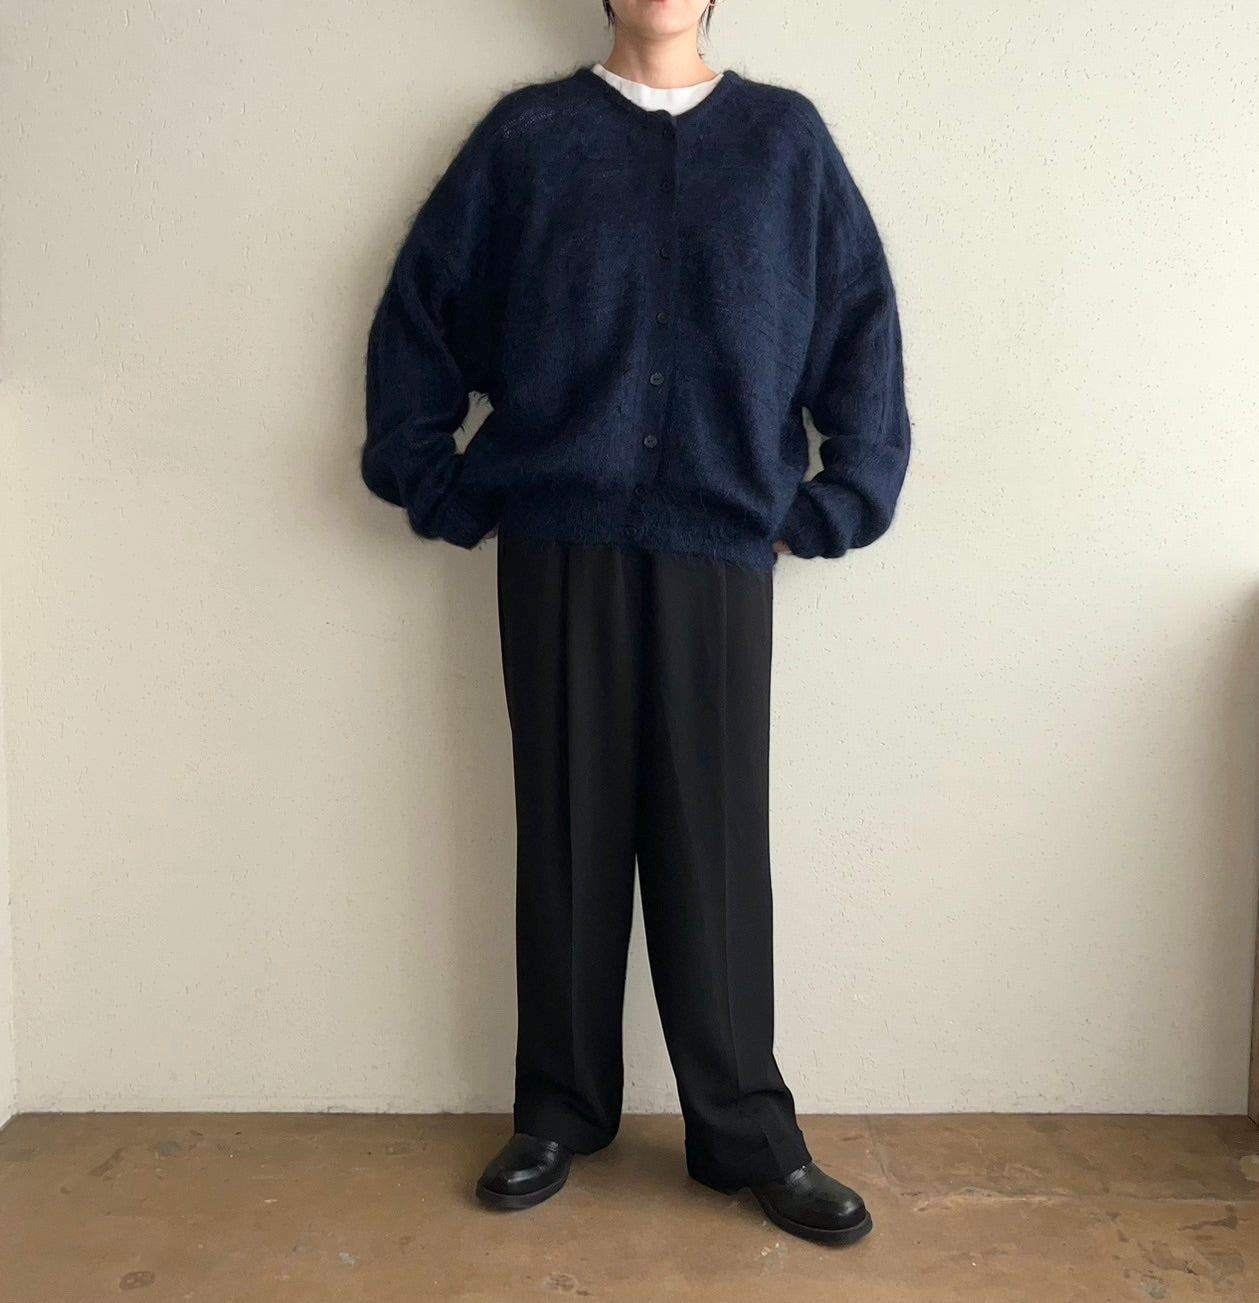 90s Navy Knit Cardigan